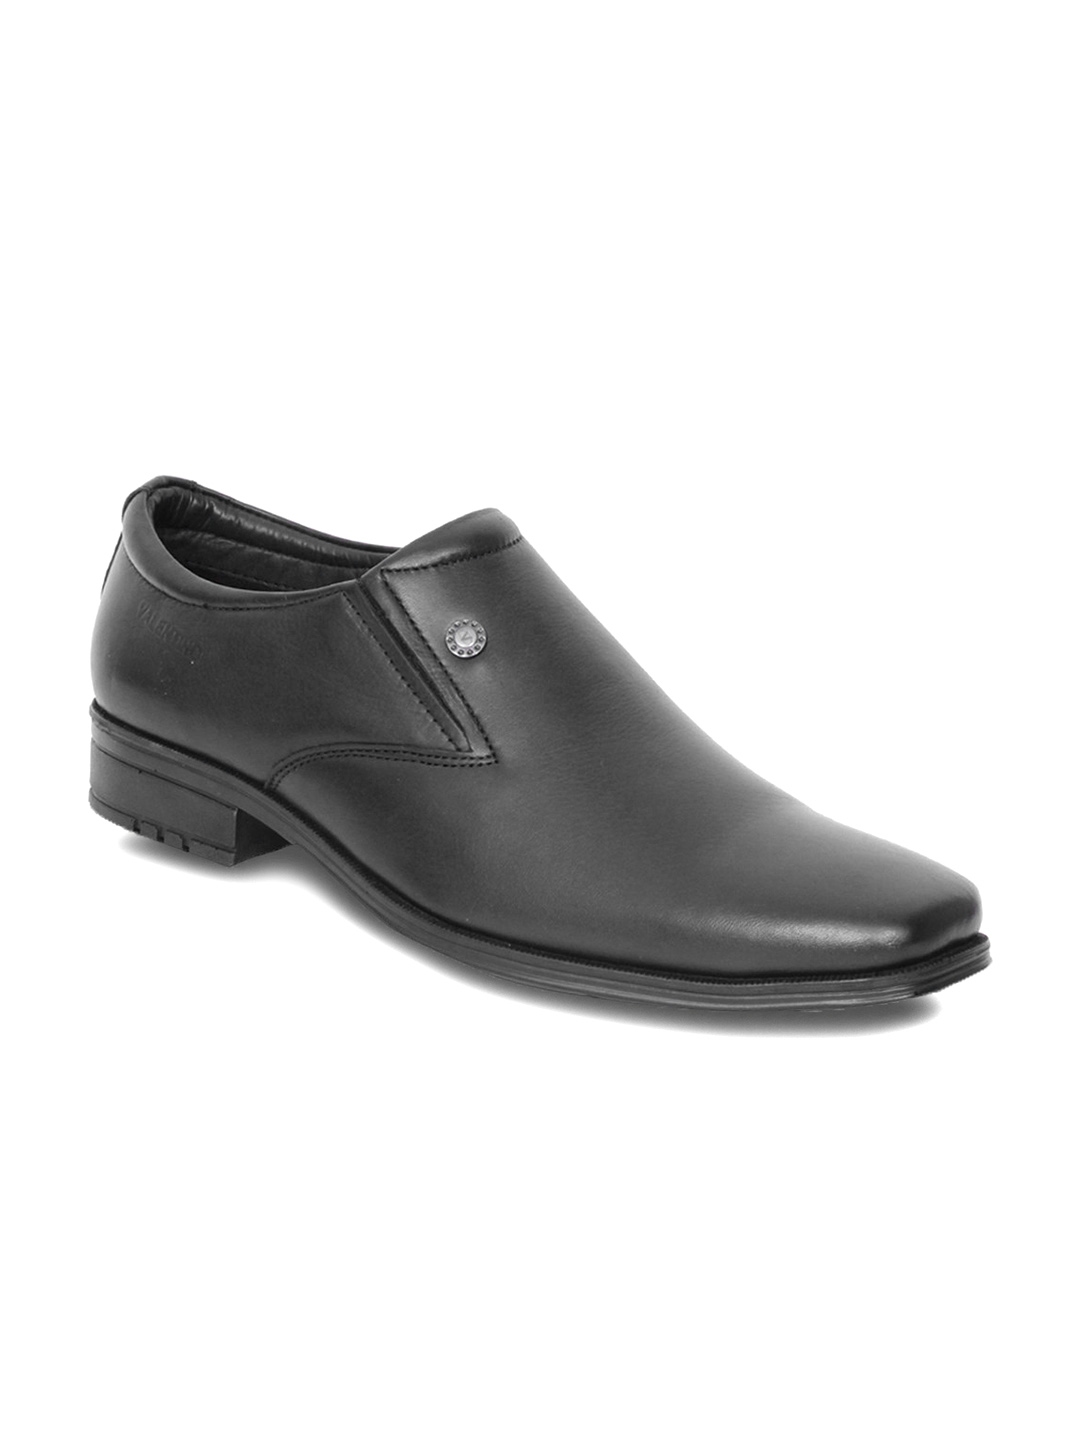 Buy Valentino Men Black Genuine Leather Formal Shoes - Formal Shoes for Men  1092636 | Myntra